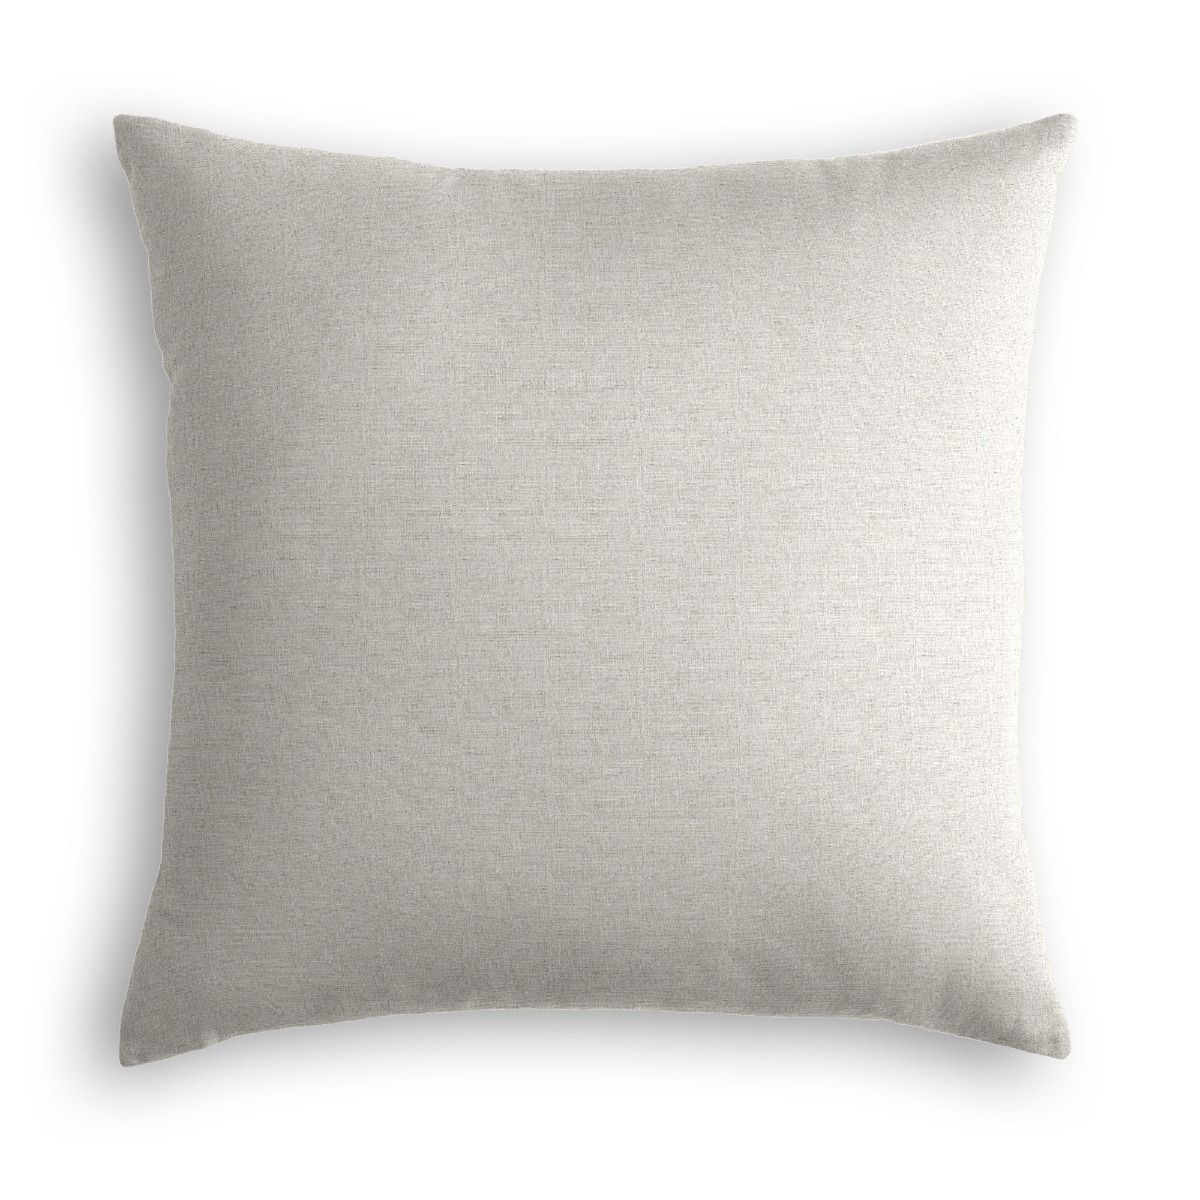 Classic Linen Pillow, Sandy Tan, 22" x 22" - Image 0